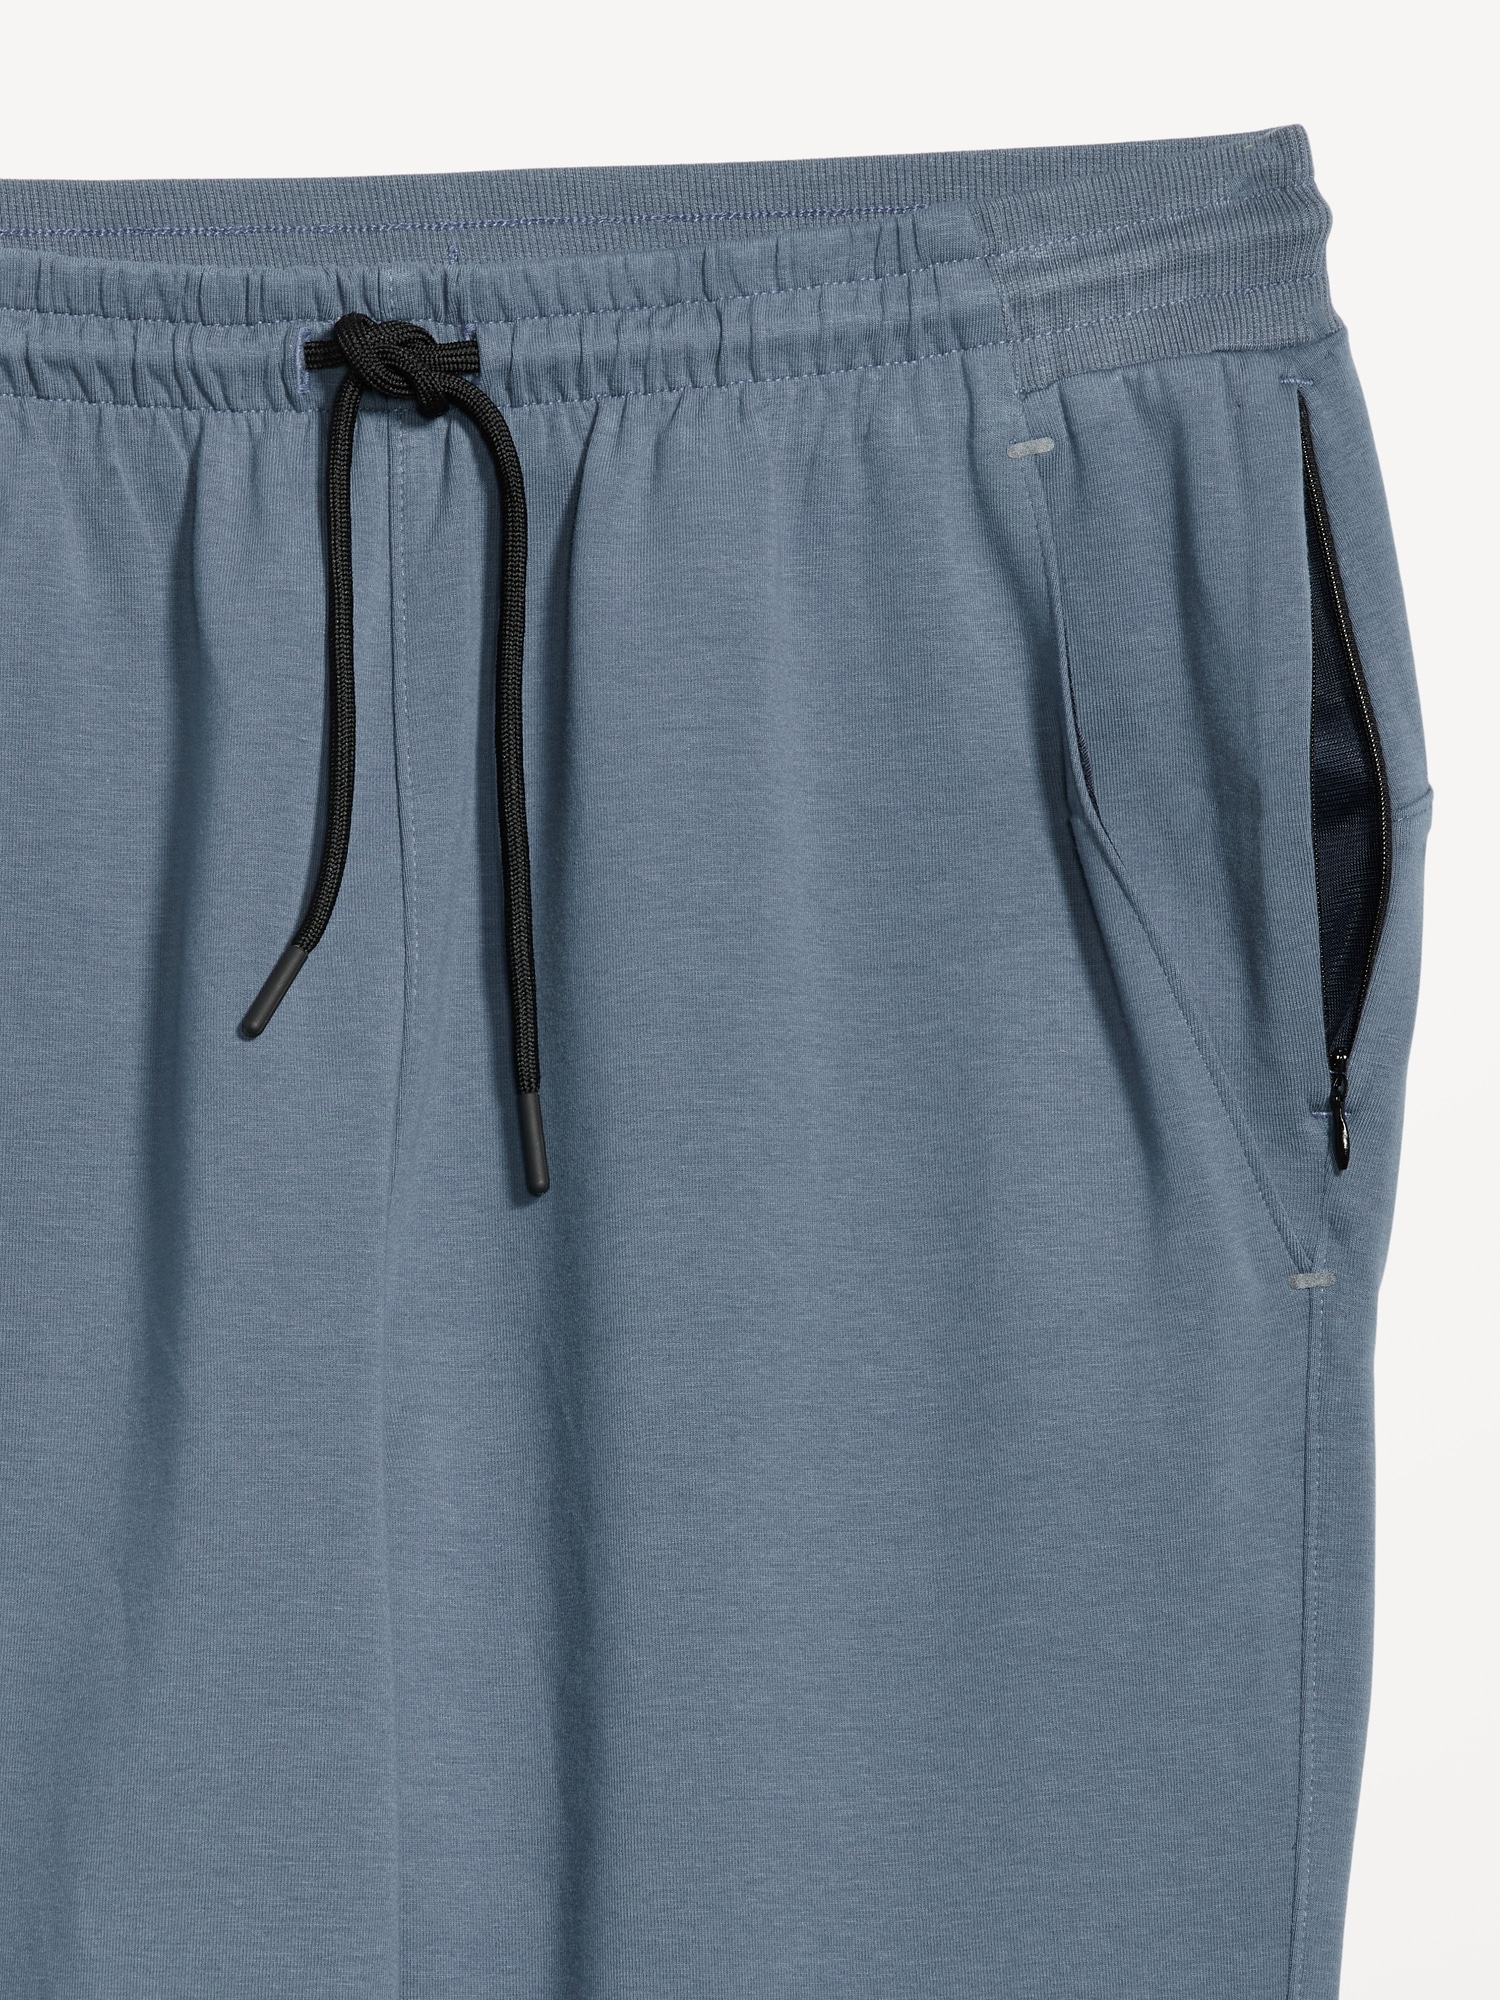 Dynamic Fleece Hidden-Pocket Jogger Sweatpants for Men | Old Navy